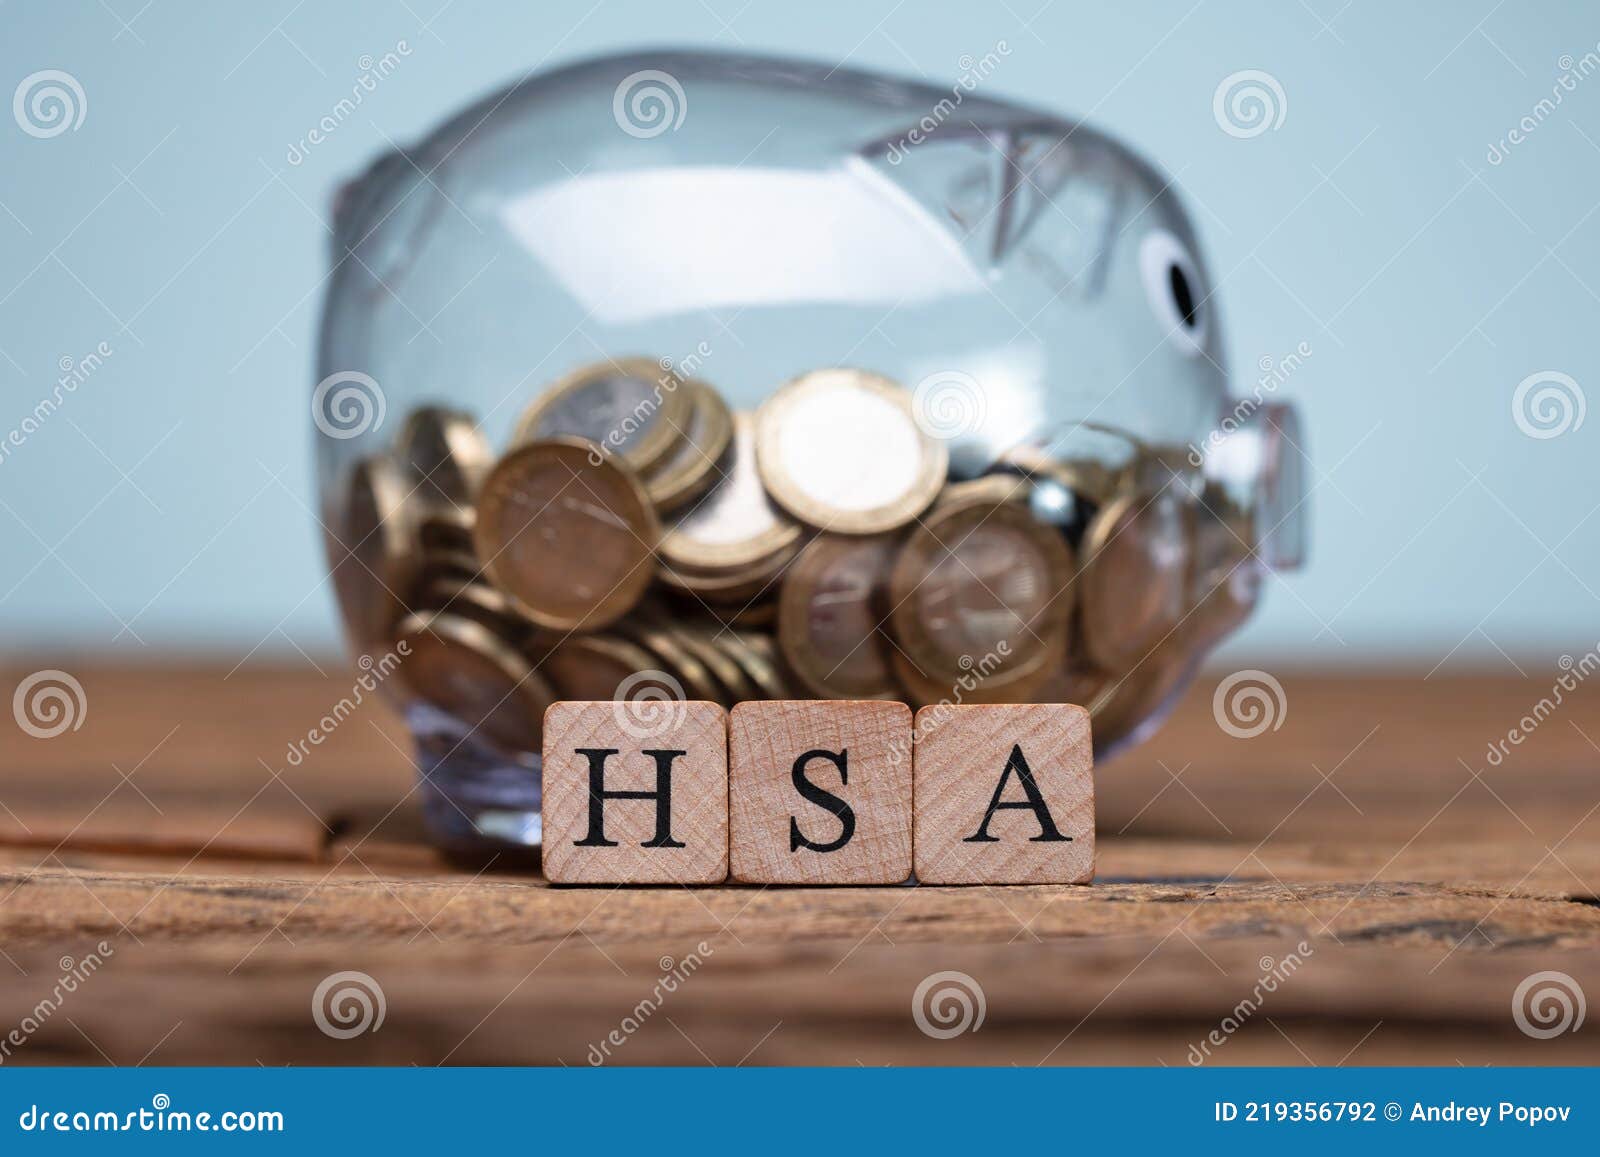 health-savings-account-letters-near-piggybank-stock-photo-image-of